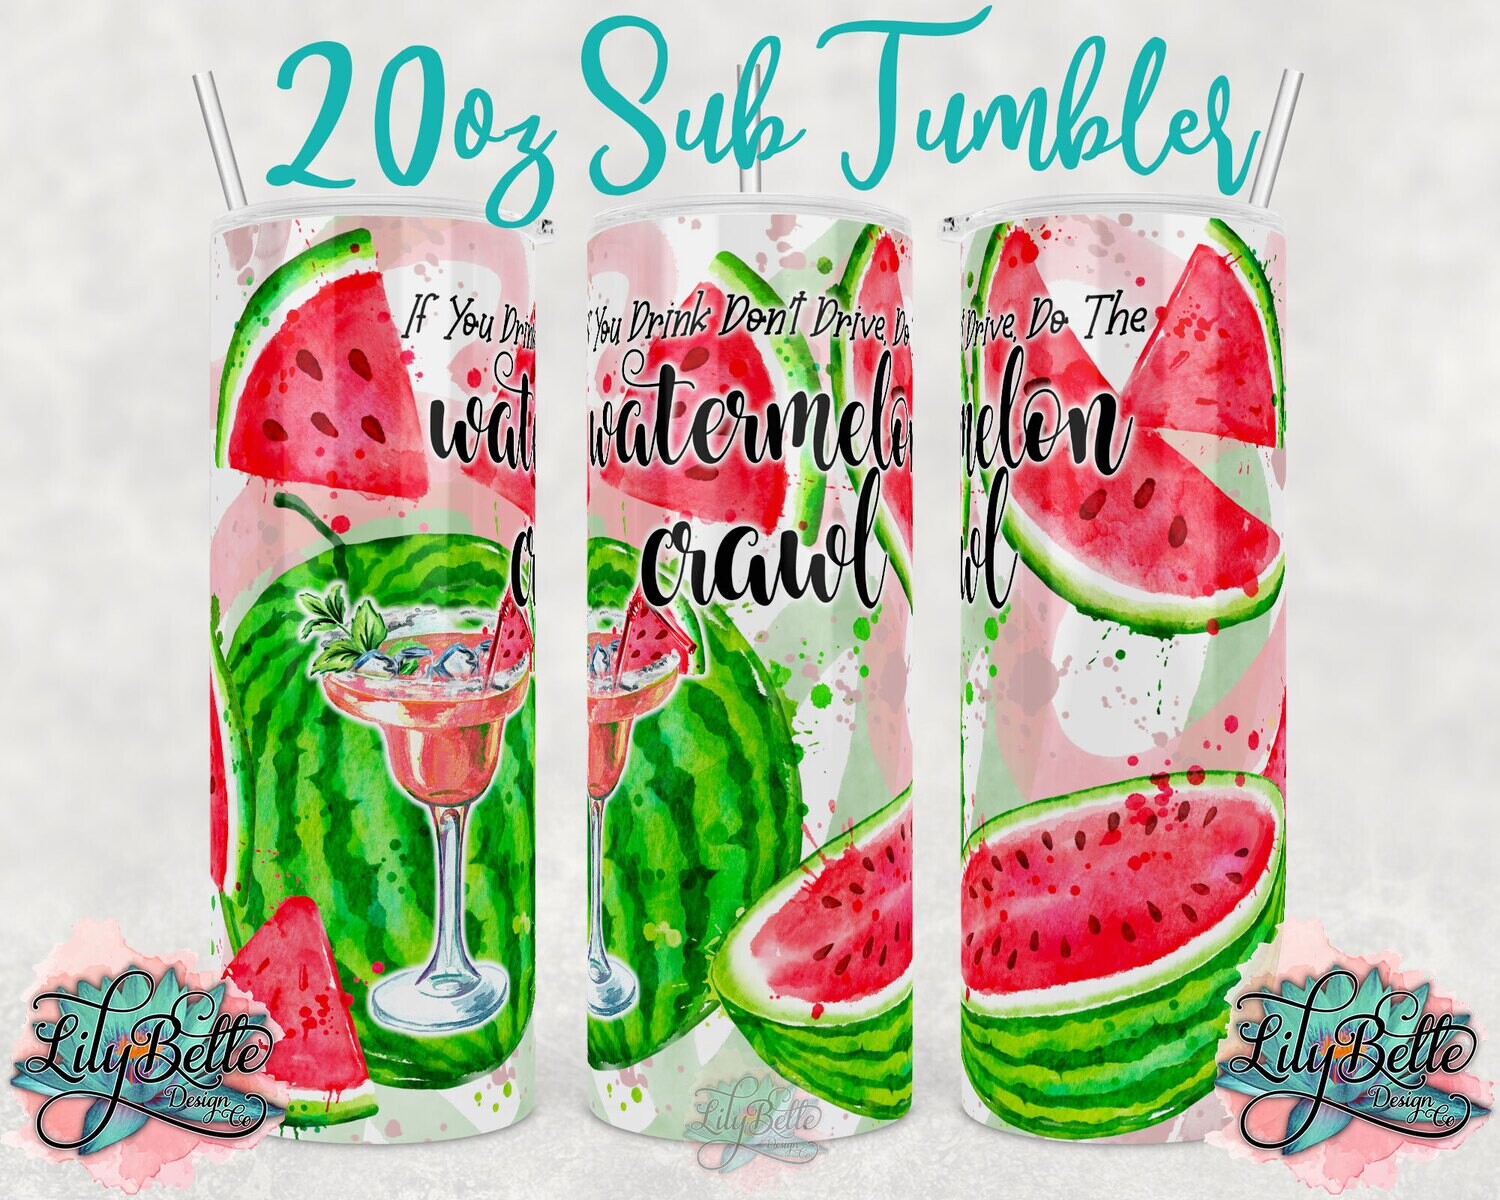 Watermelon Crawl
20oz Sublimation Tumbler